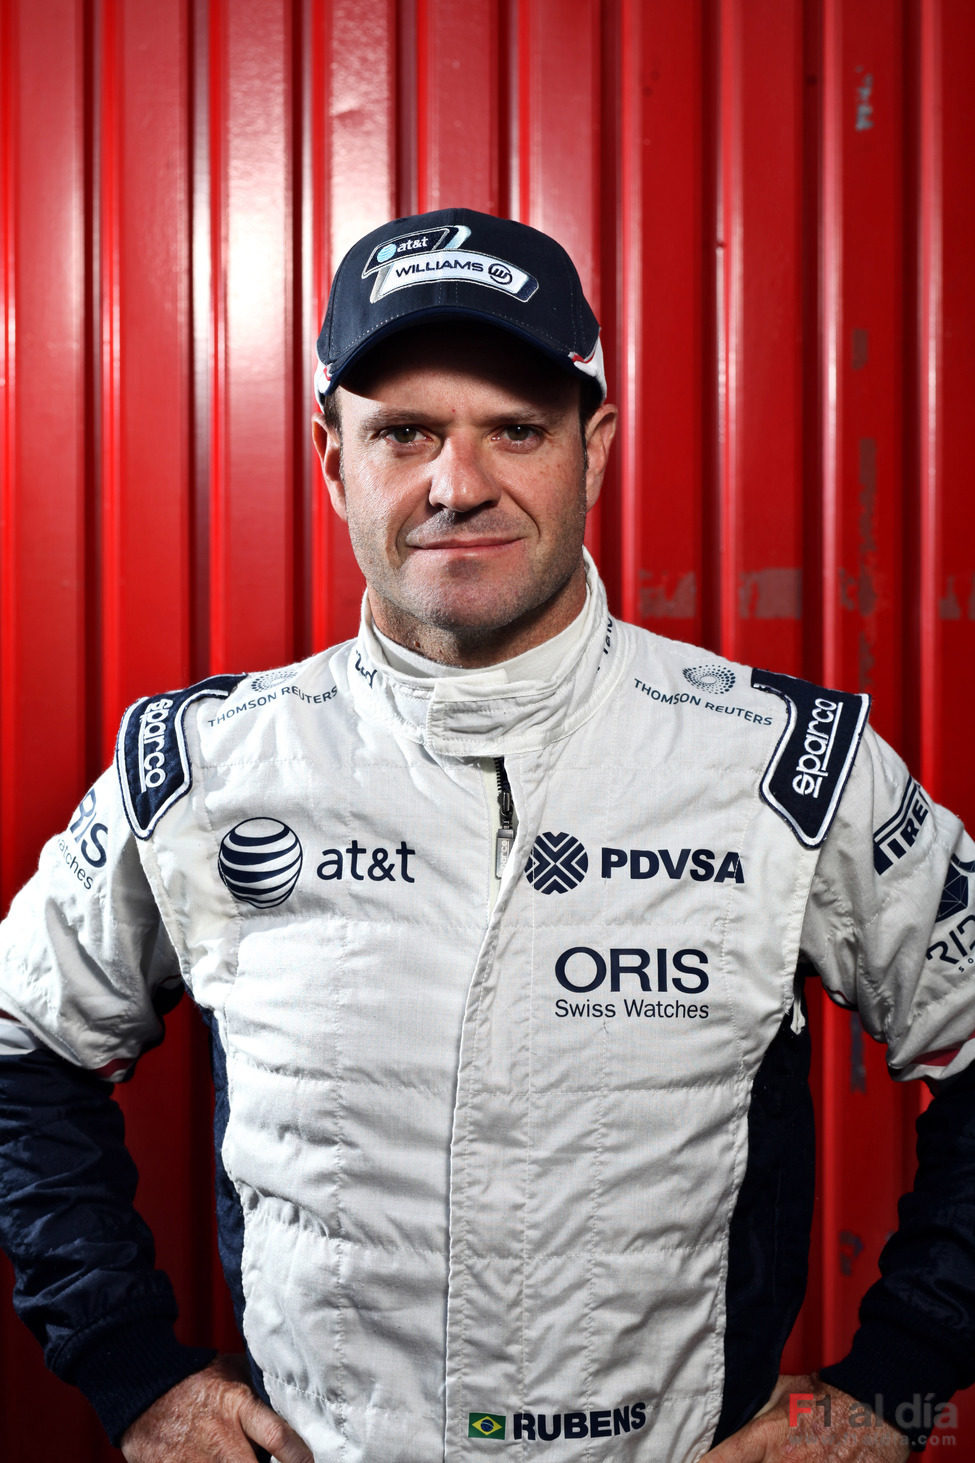 Rubens Barrichello, piloto de Williams para 2011